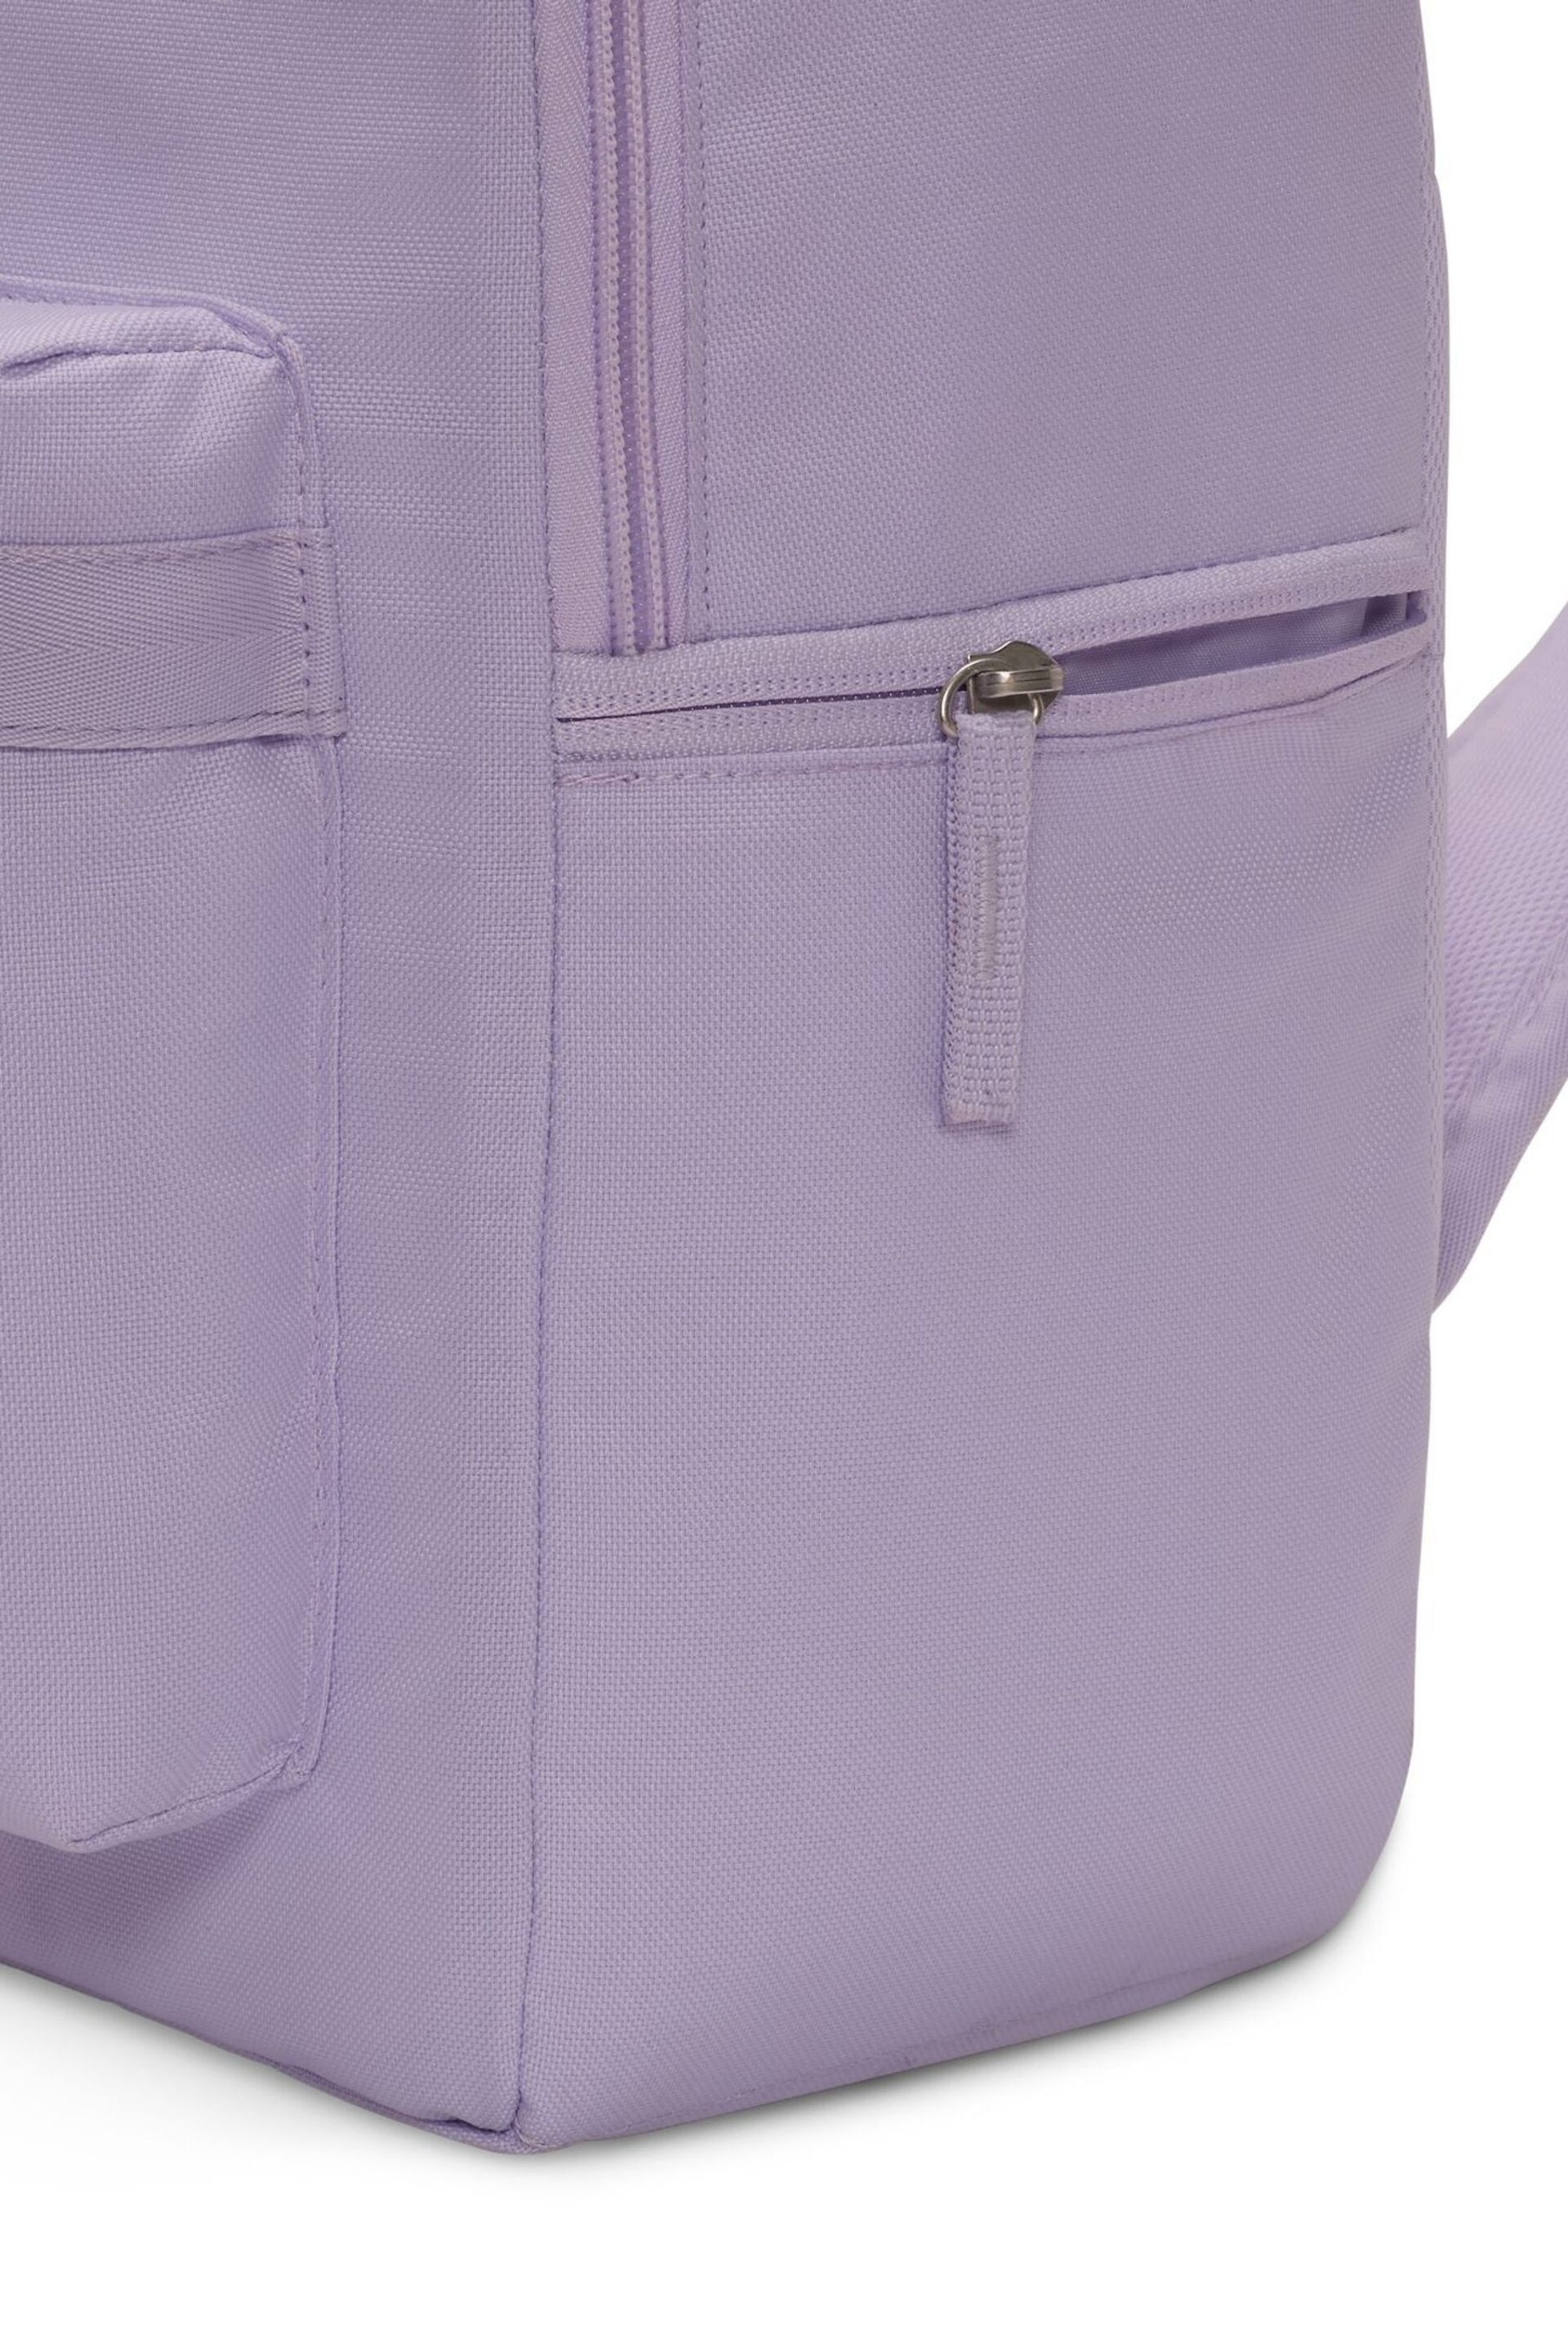 Nike Purple Heritage Backpack (25L) - Image 5 of 8